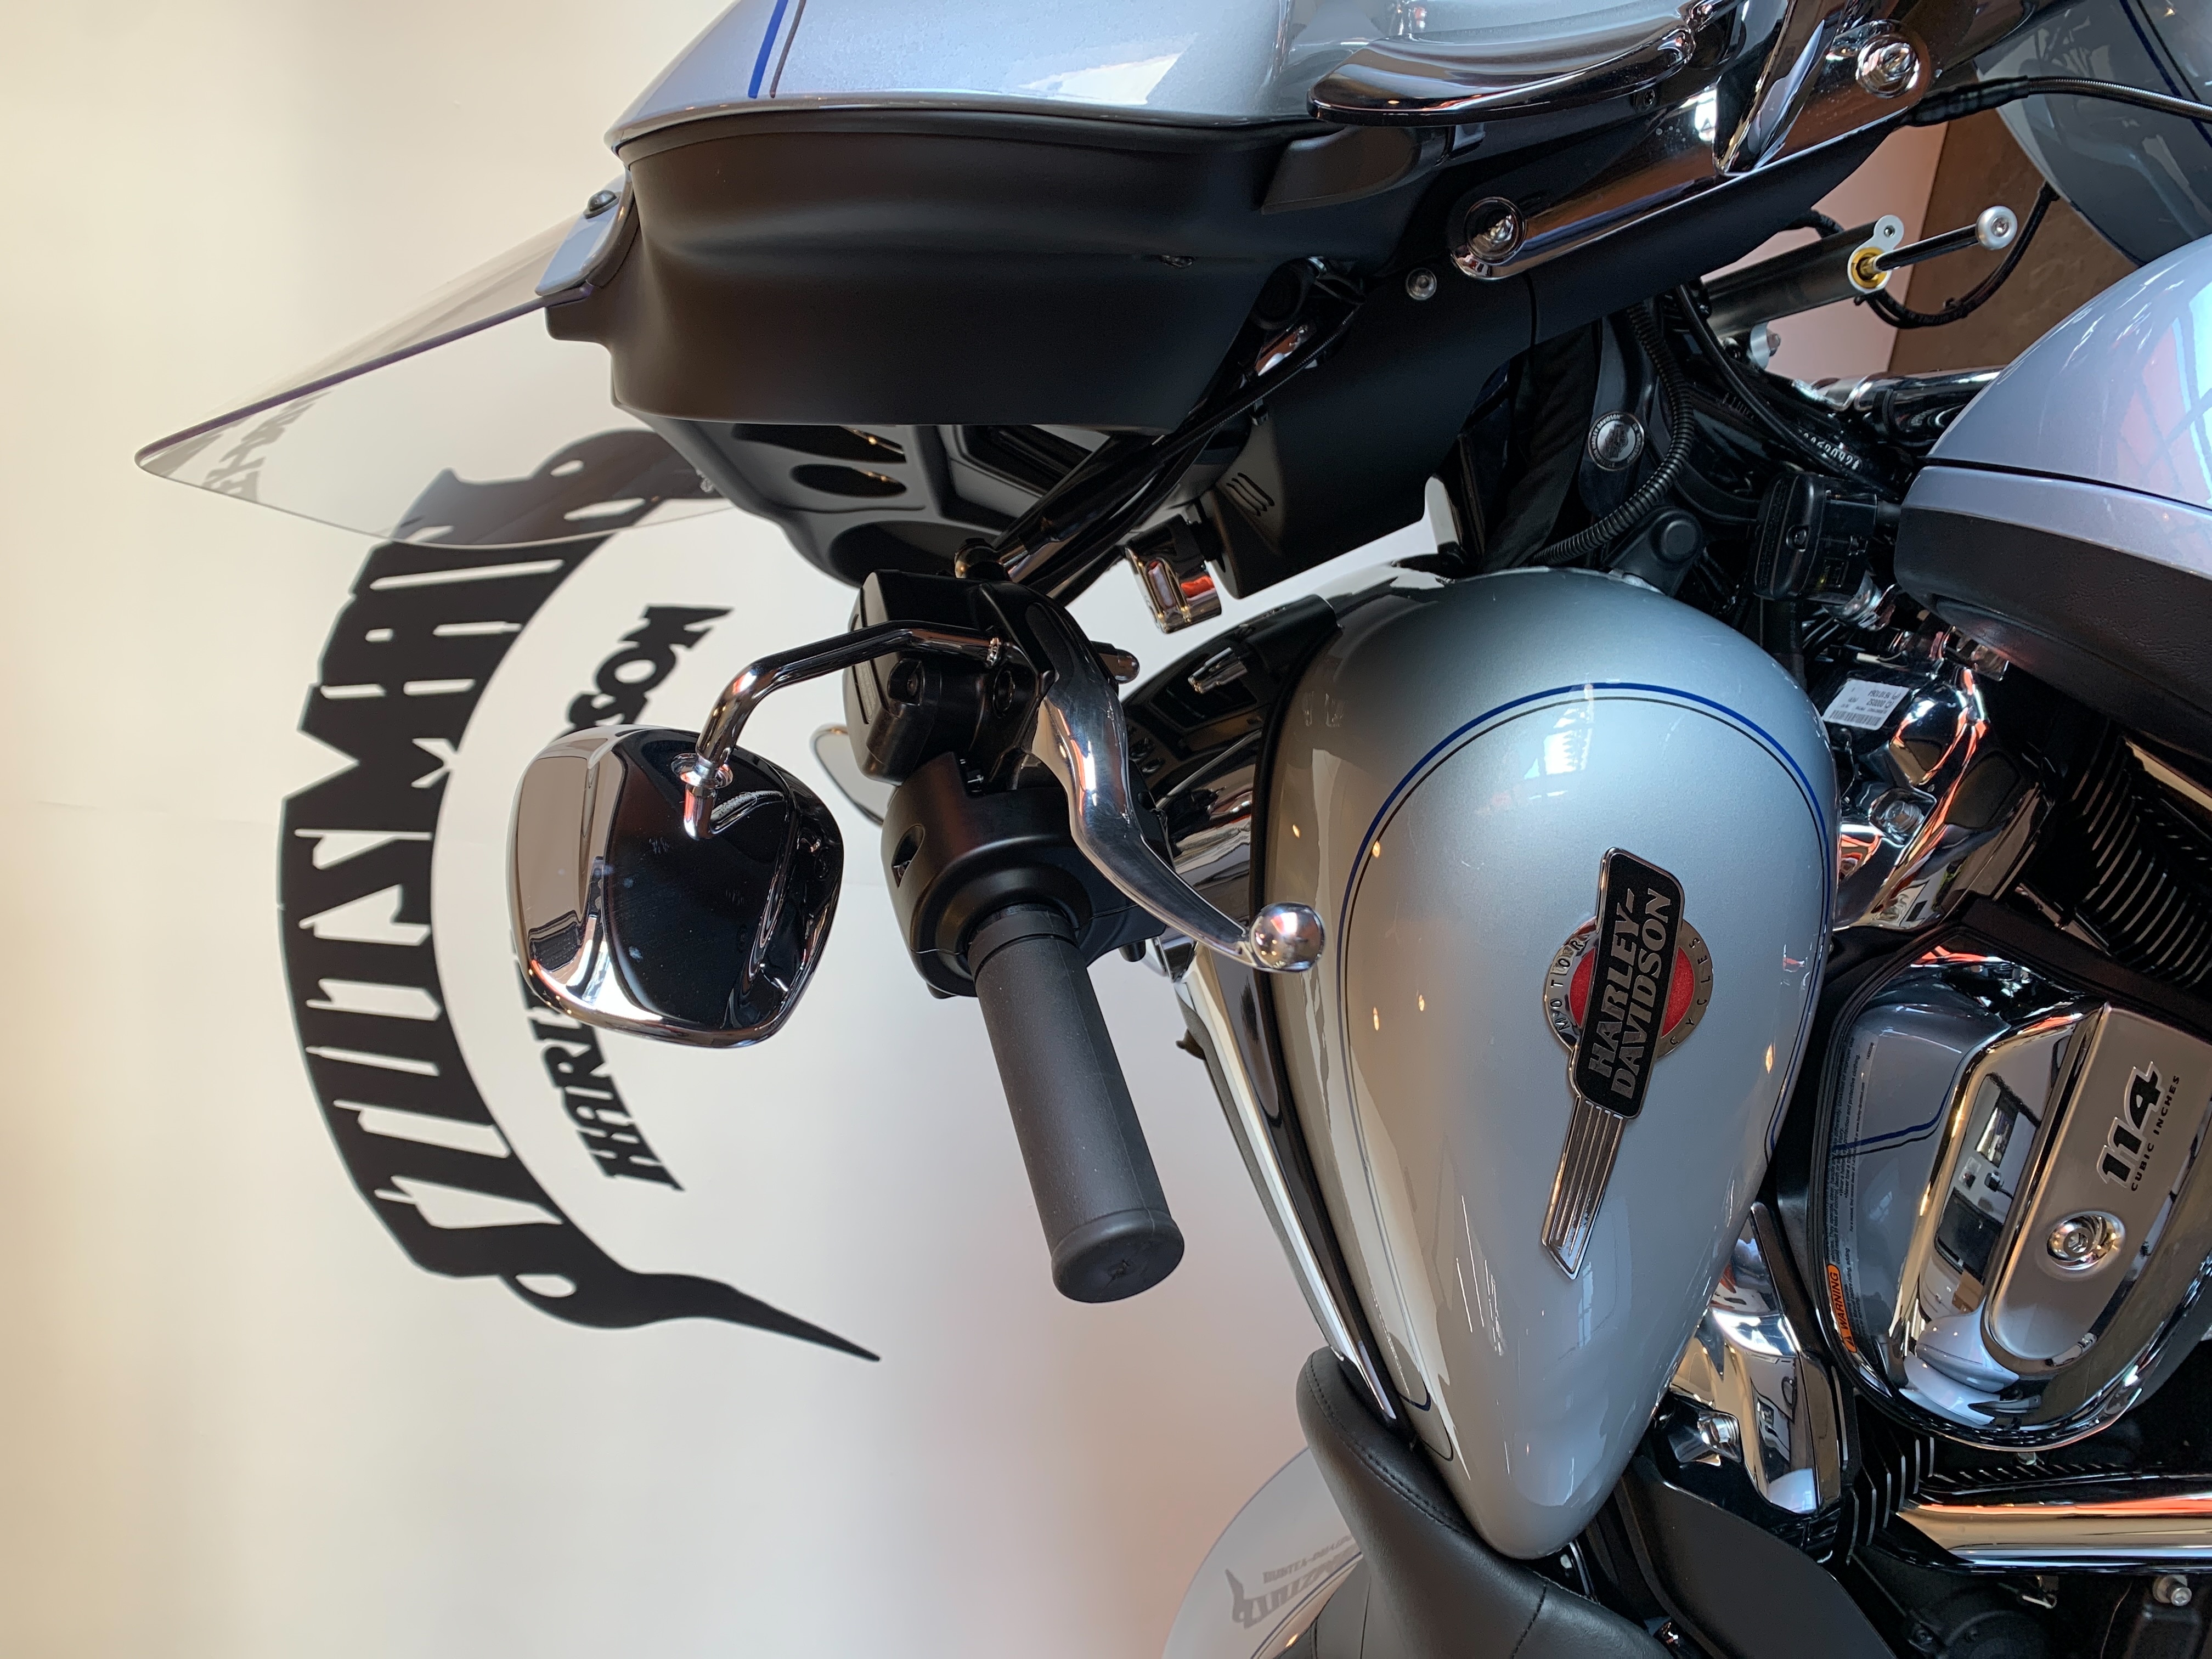 2023 Harley-Davidson Trike Tri Glide Ultra at Stutsman Harley-Davidson